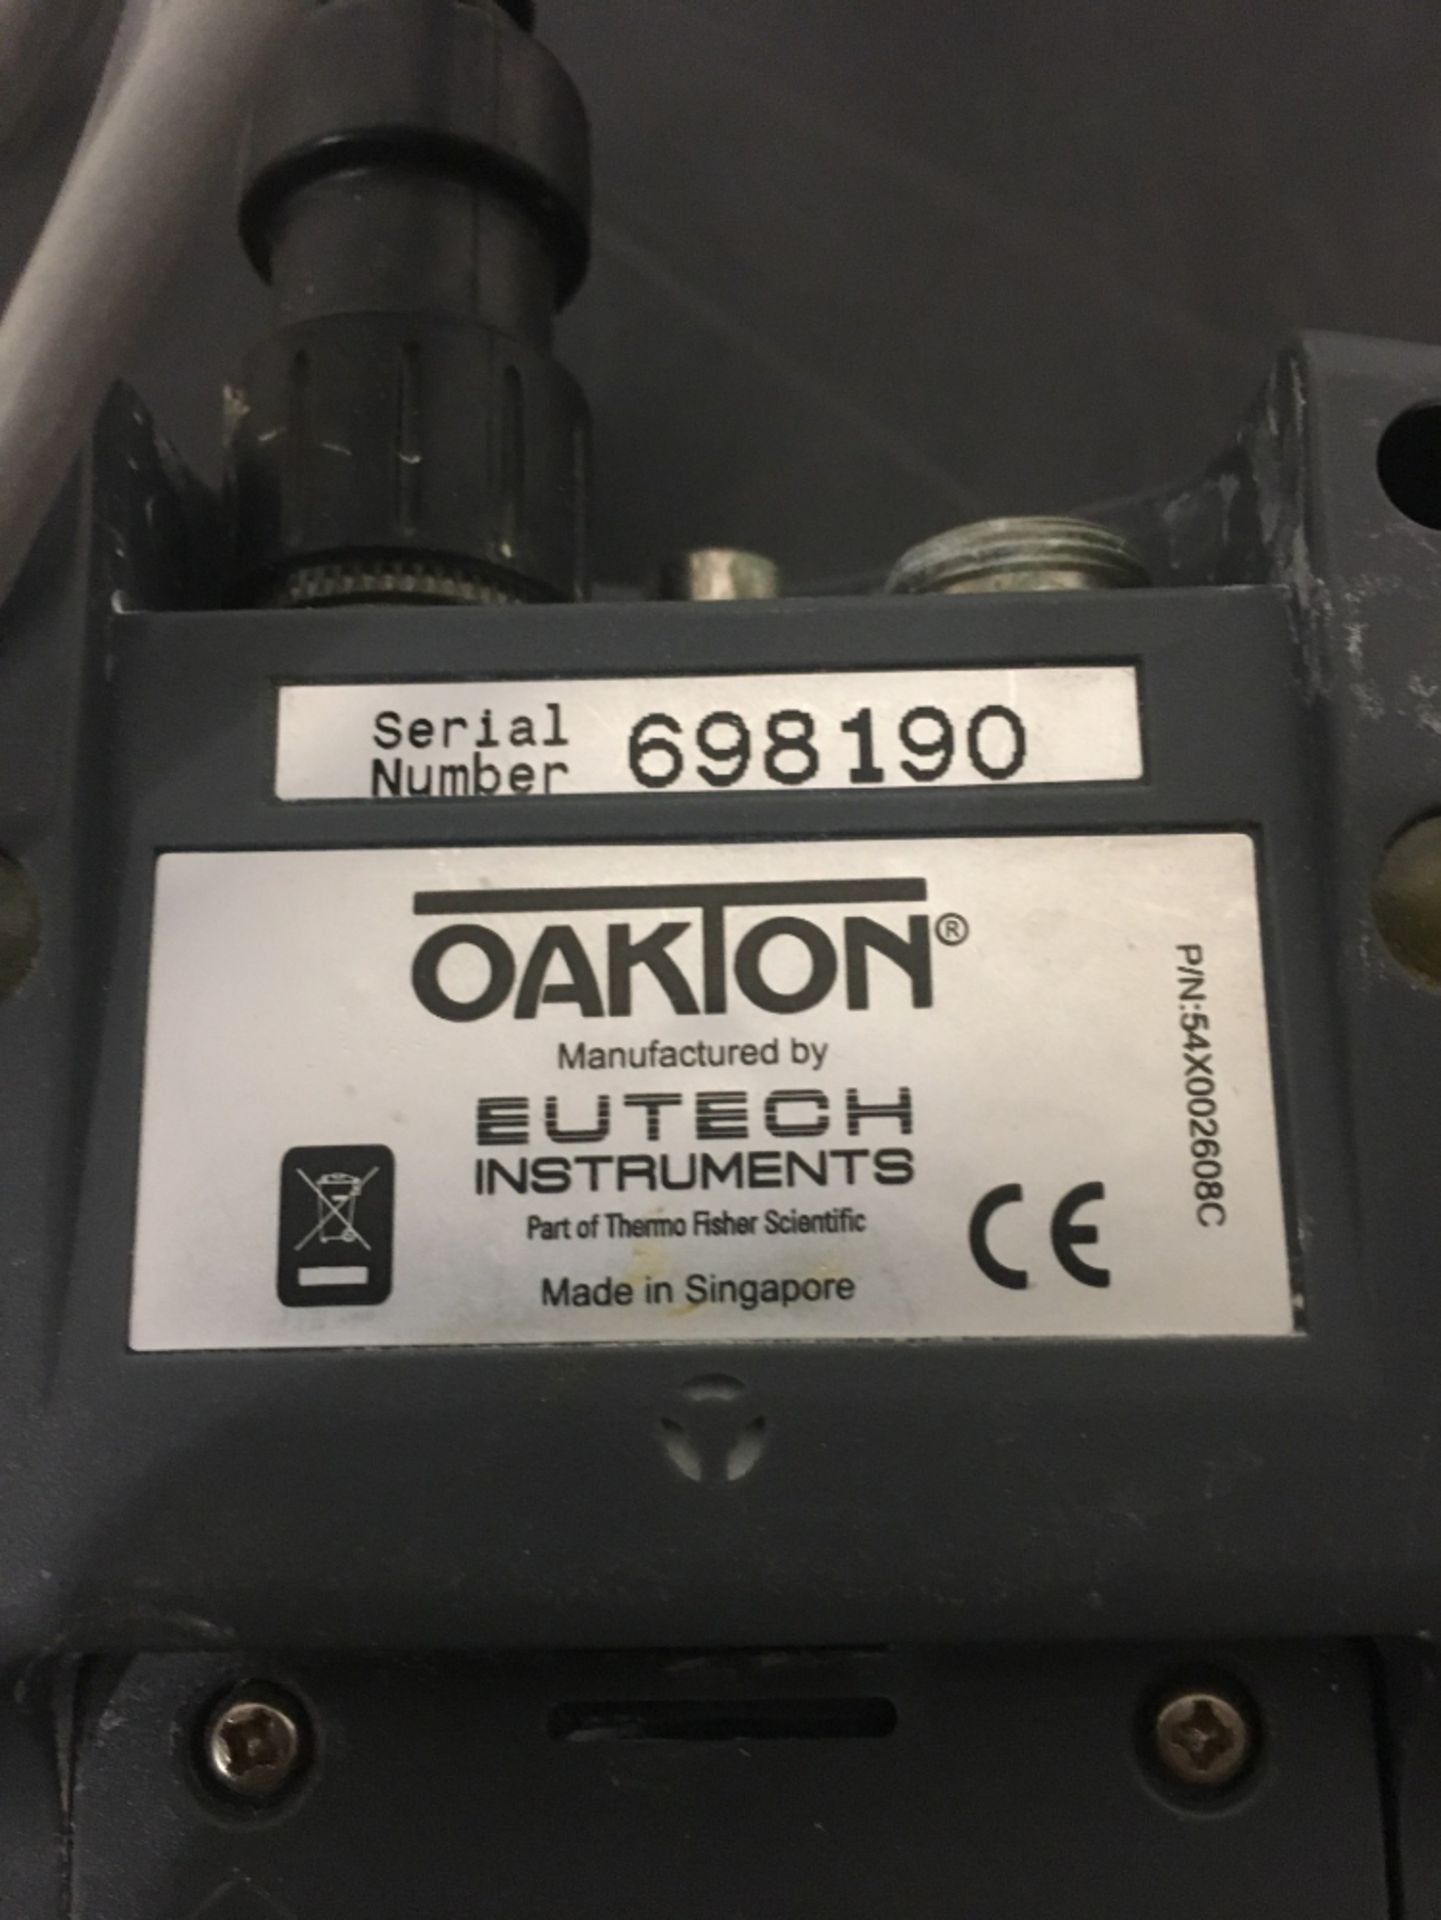 Oakton PCD650 Waterproof Multiparameter Meter - Image 2 of 2